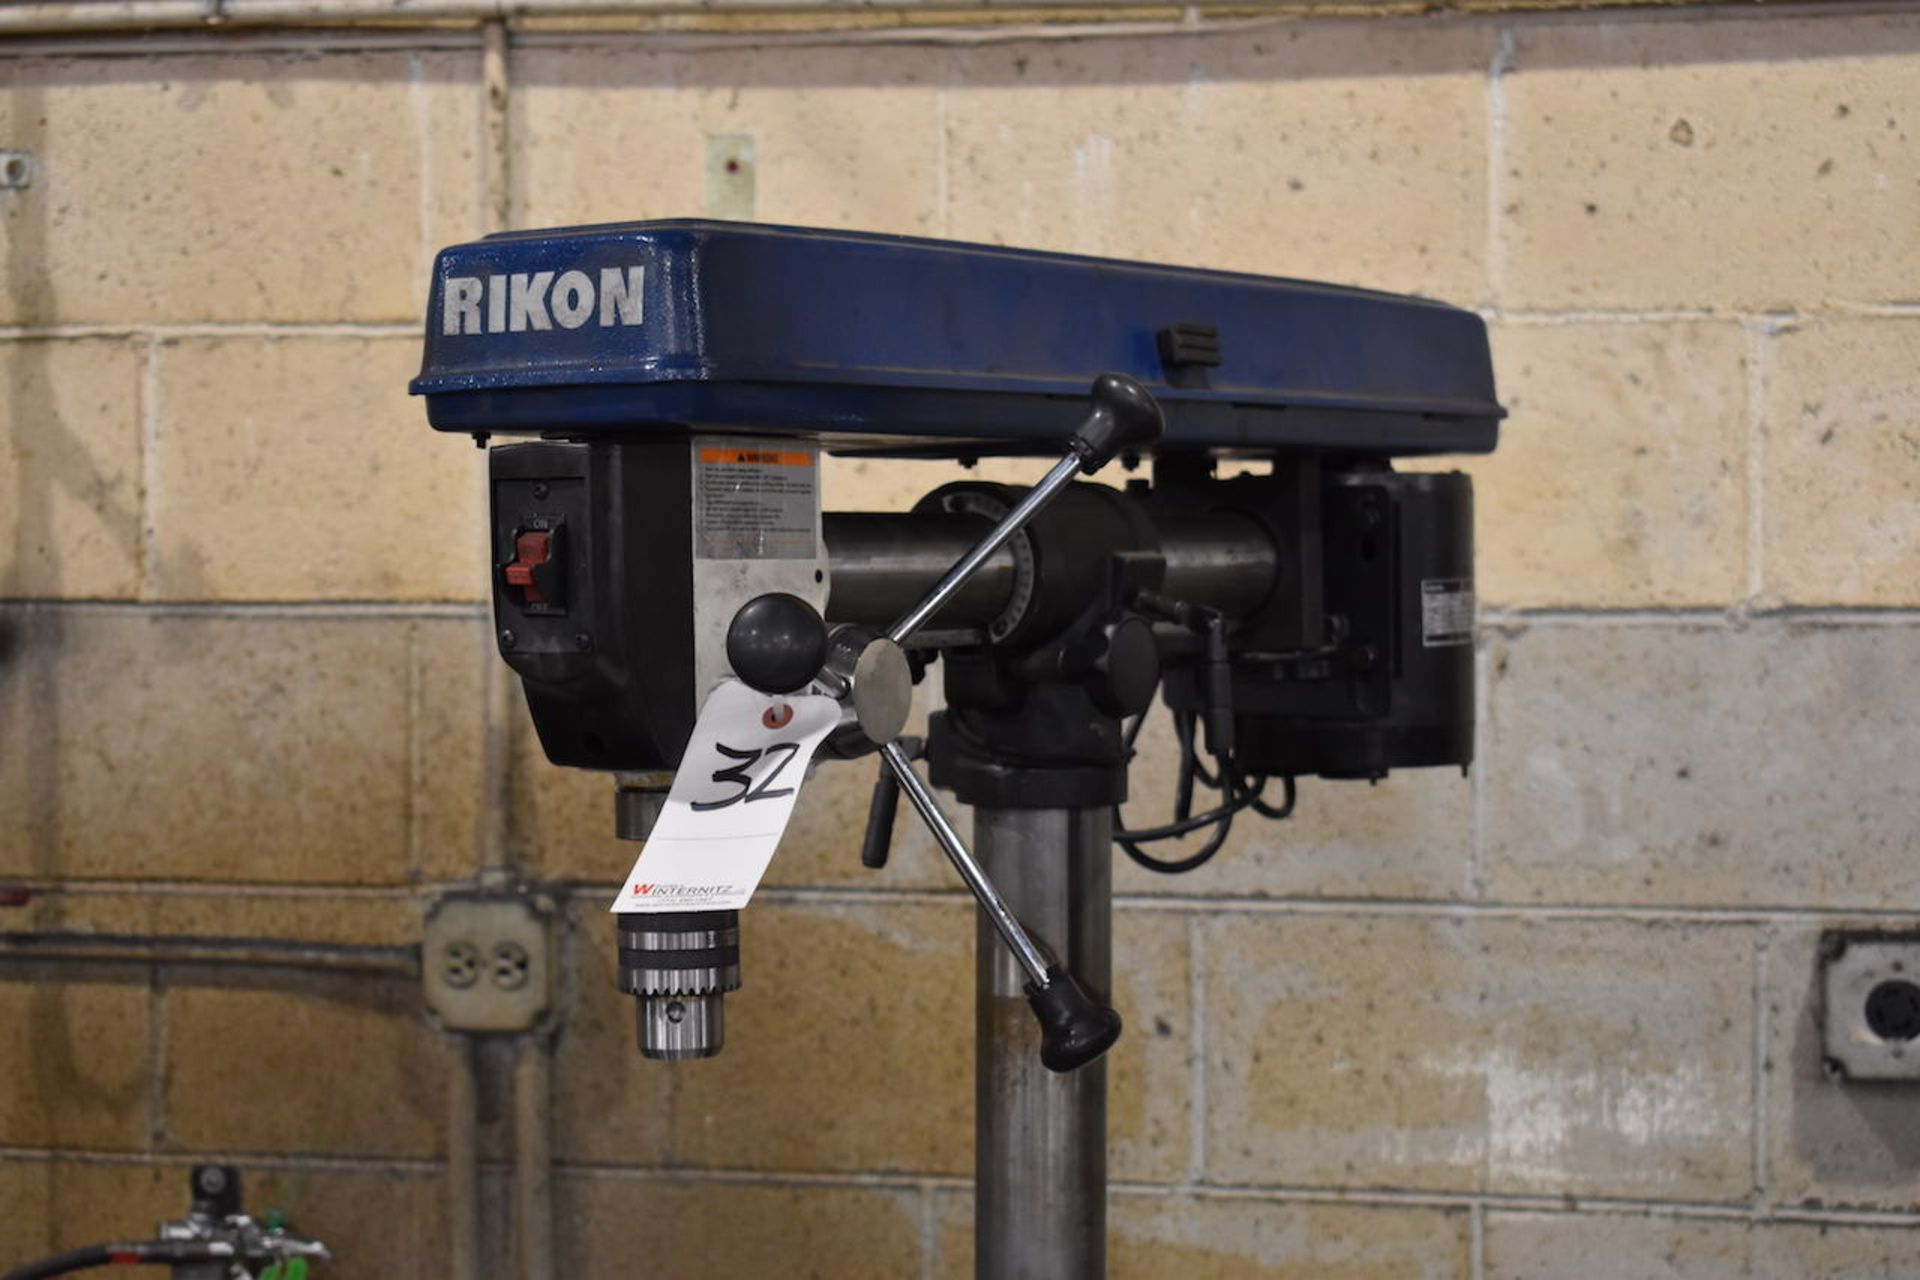 Rikon 34 in. Model 30-251 Floor Radial Drill Press, S/N 140324T1016, 1/3 HP, 120 Volt, 5-Speed ( - Image 2 of 4